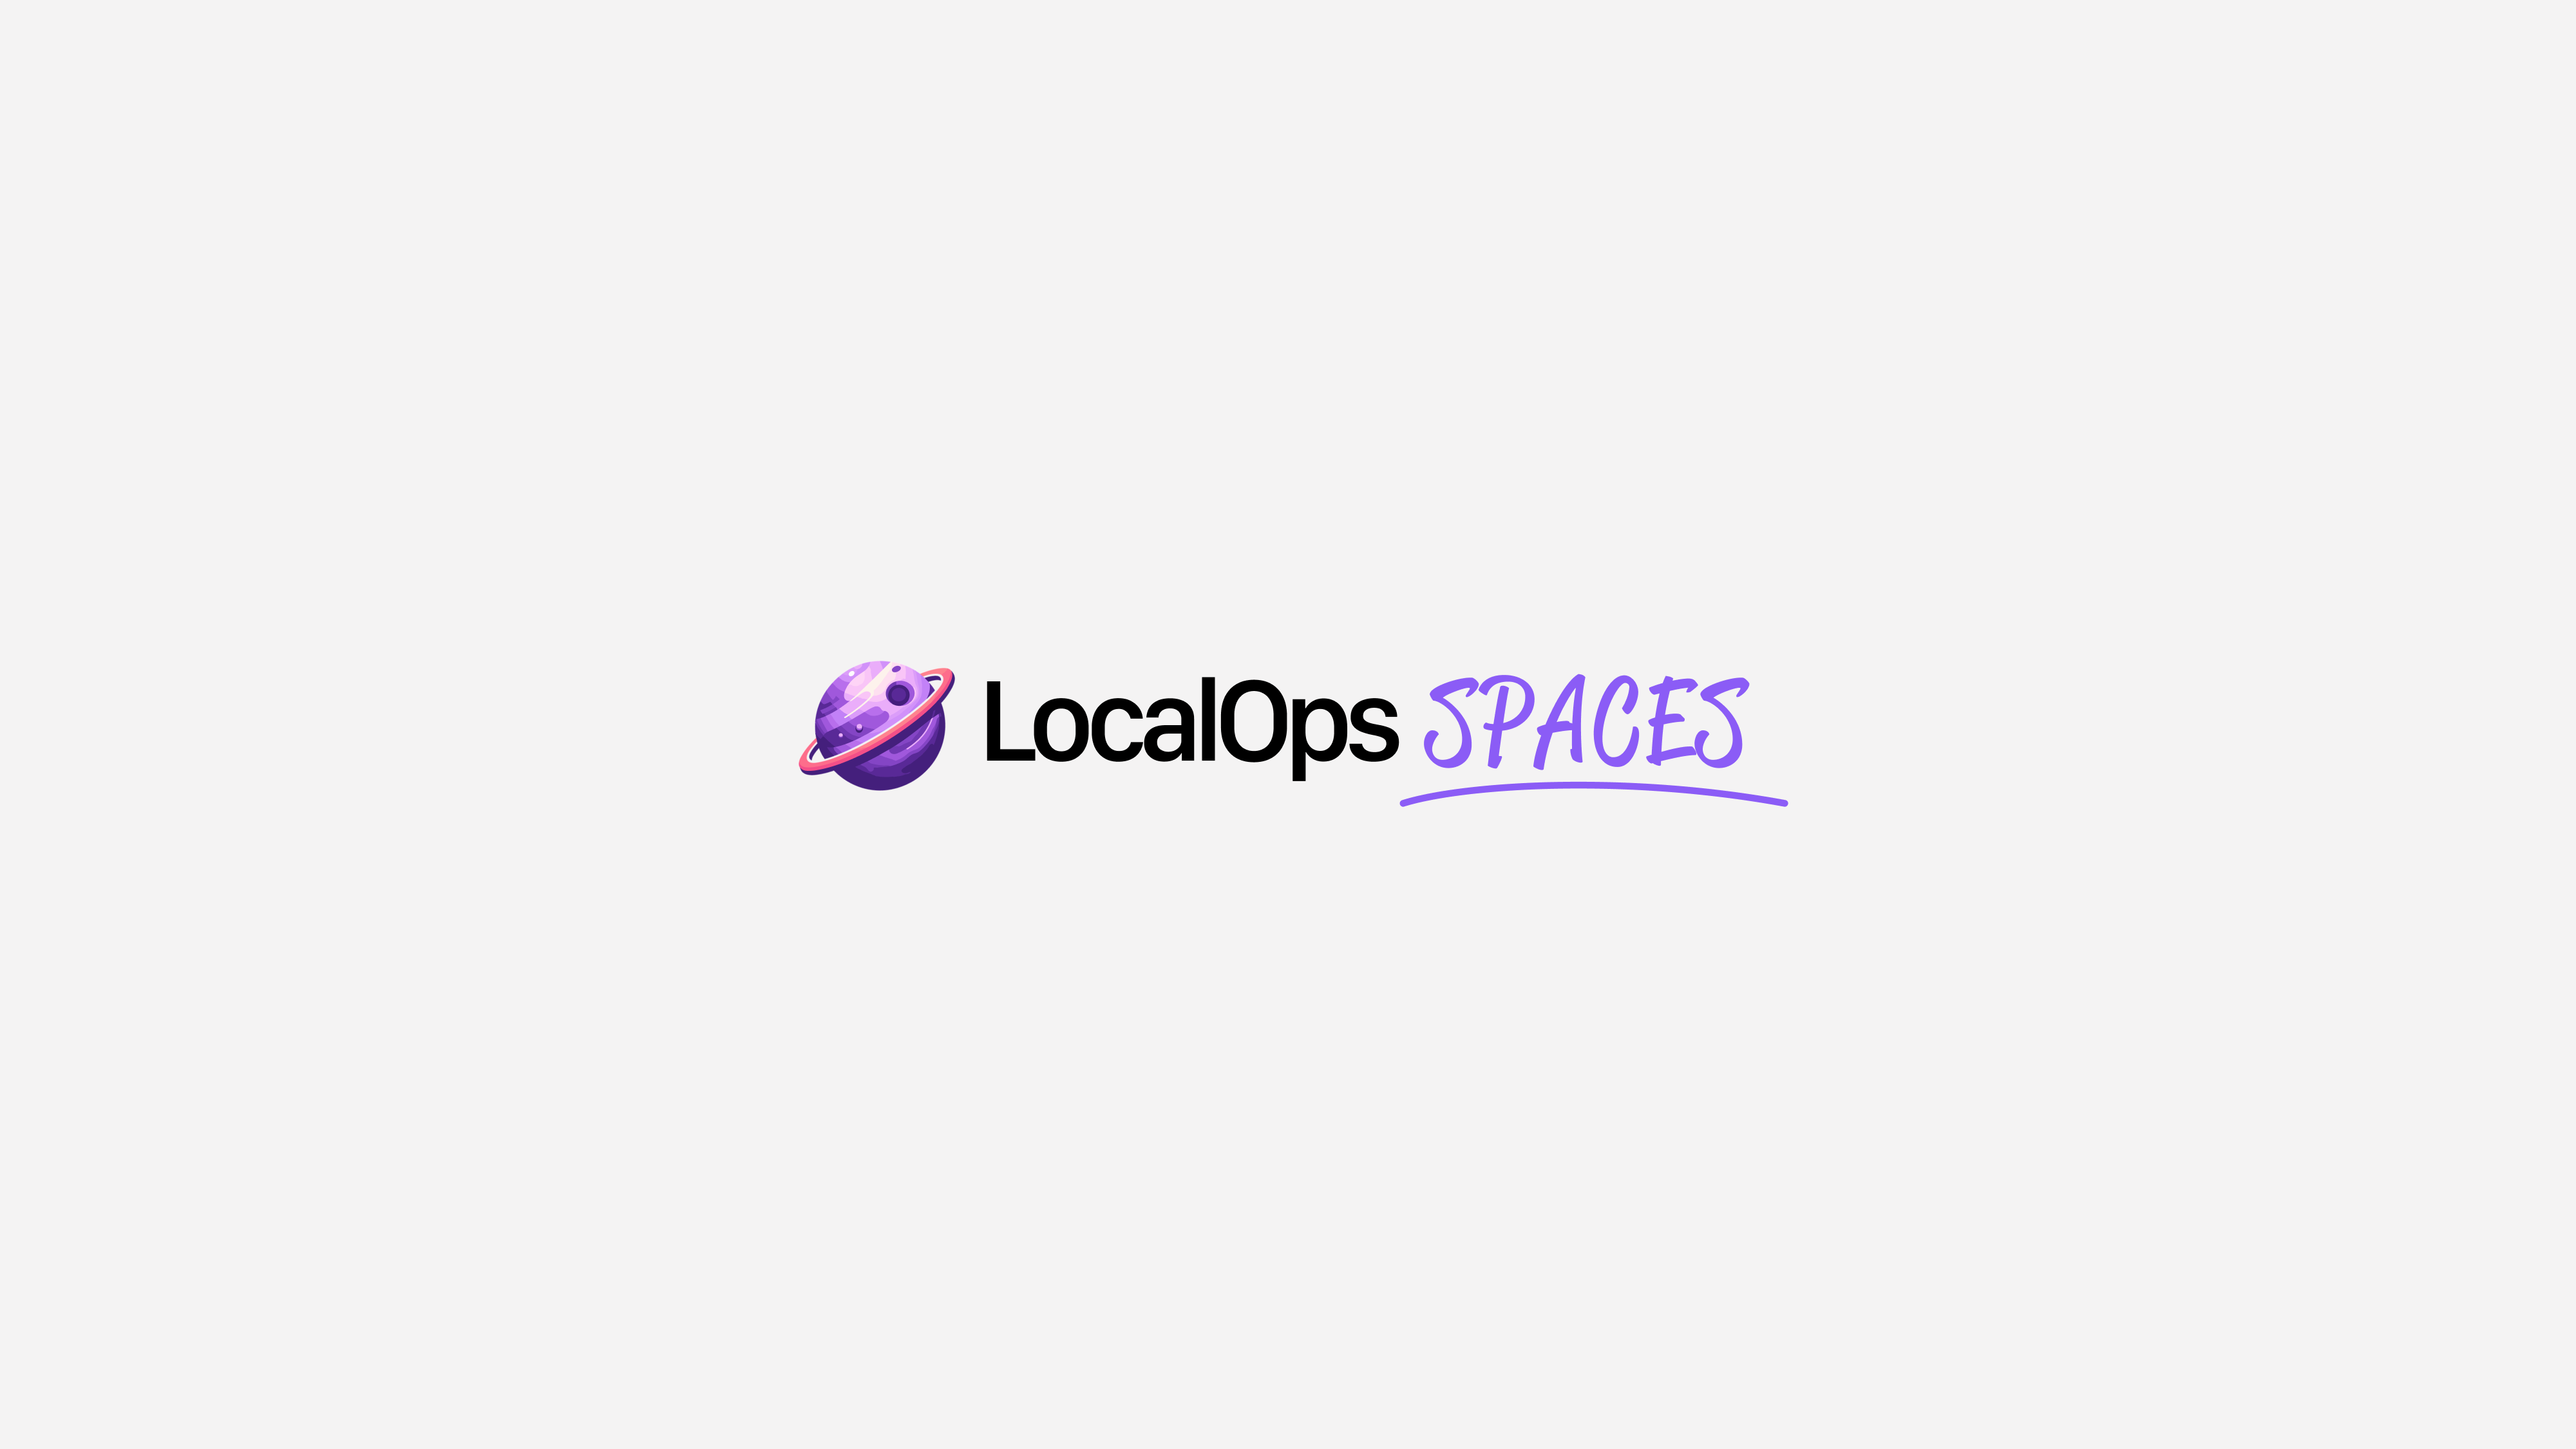 Introducing LocalOps Spaces